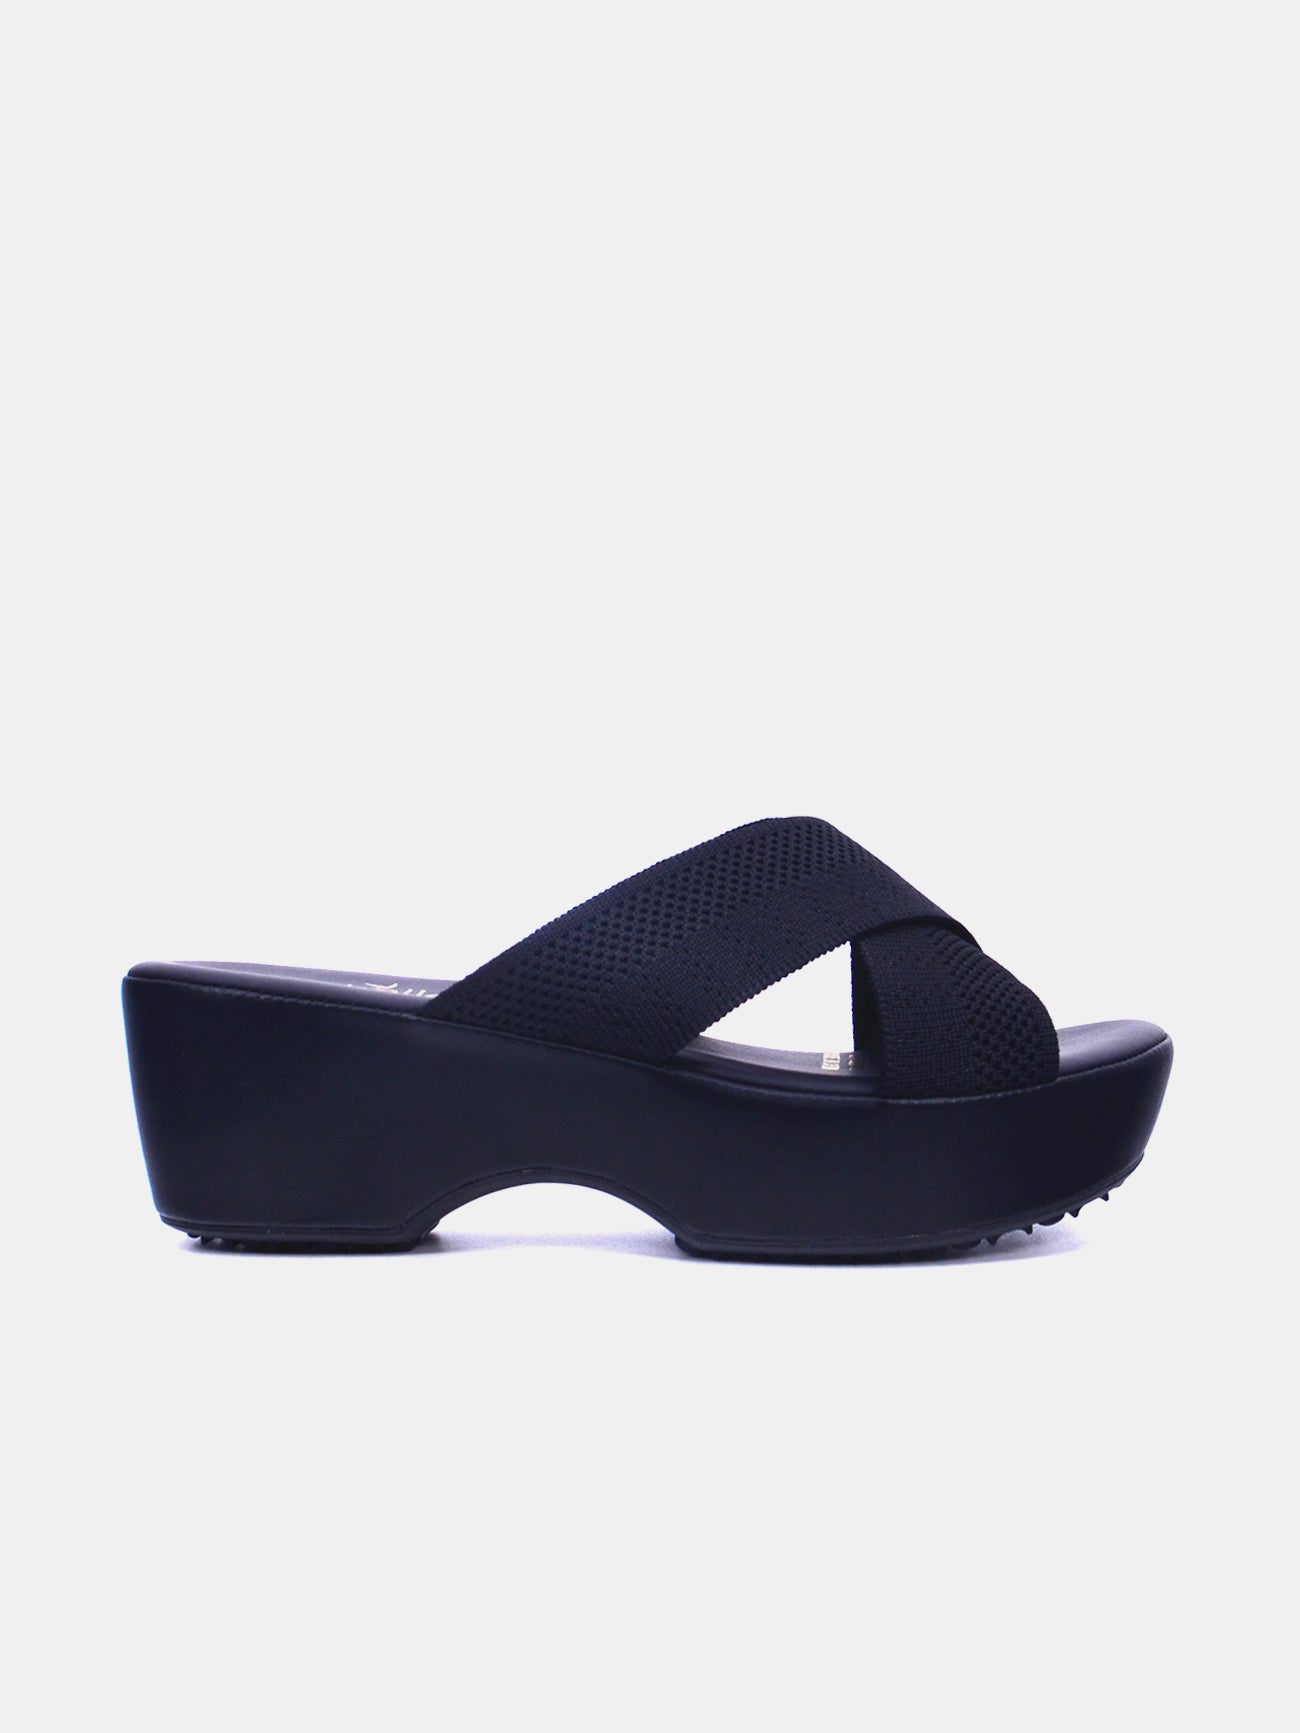 Michelle Morgan 214RJL16 Women's Heeled Sandals #color_Black